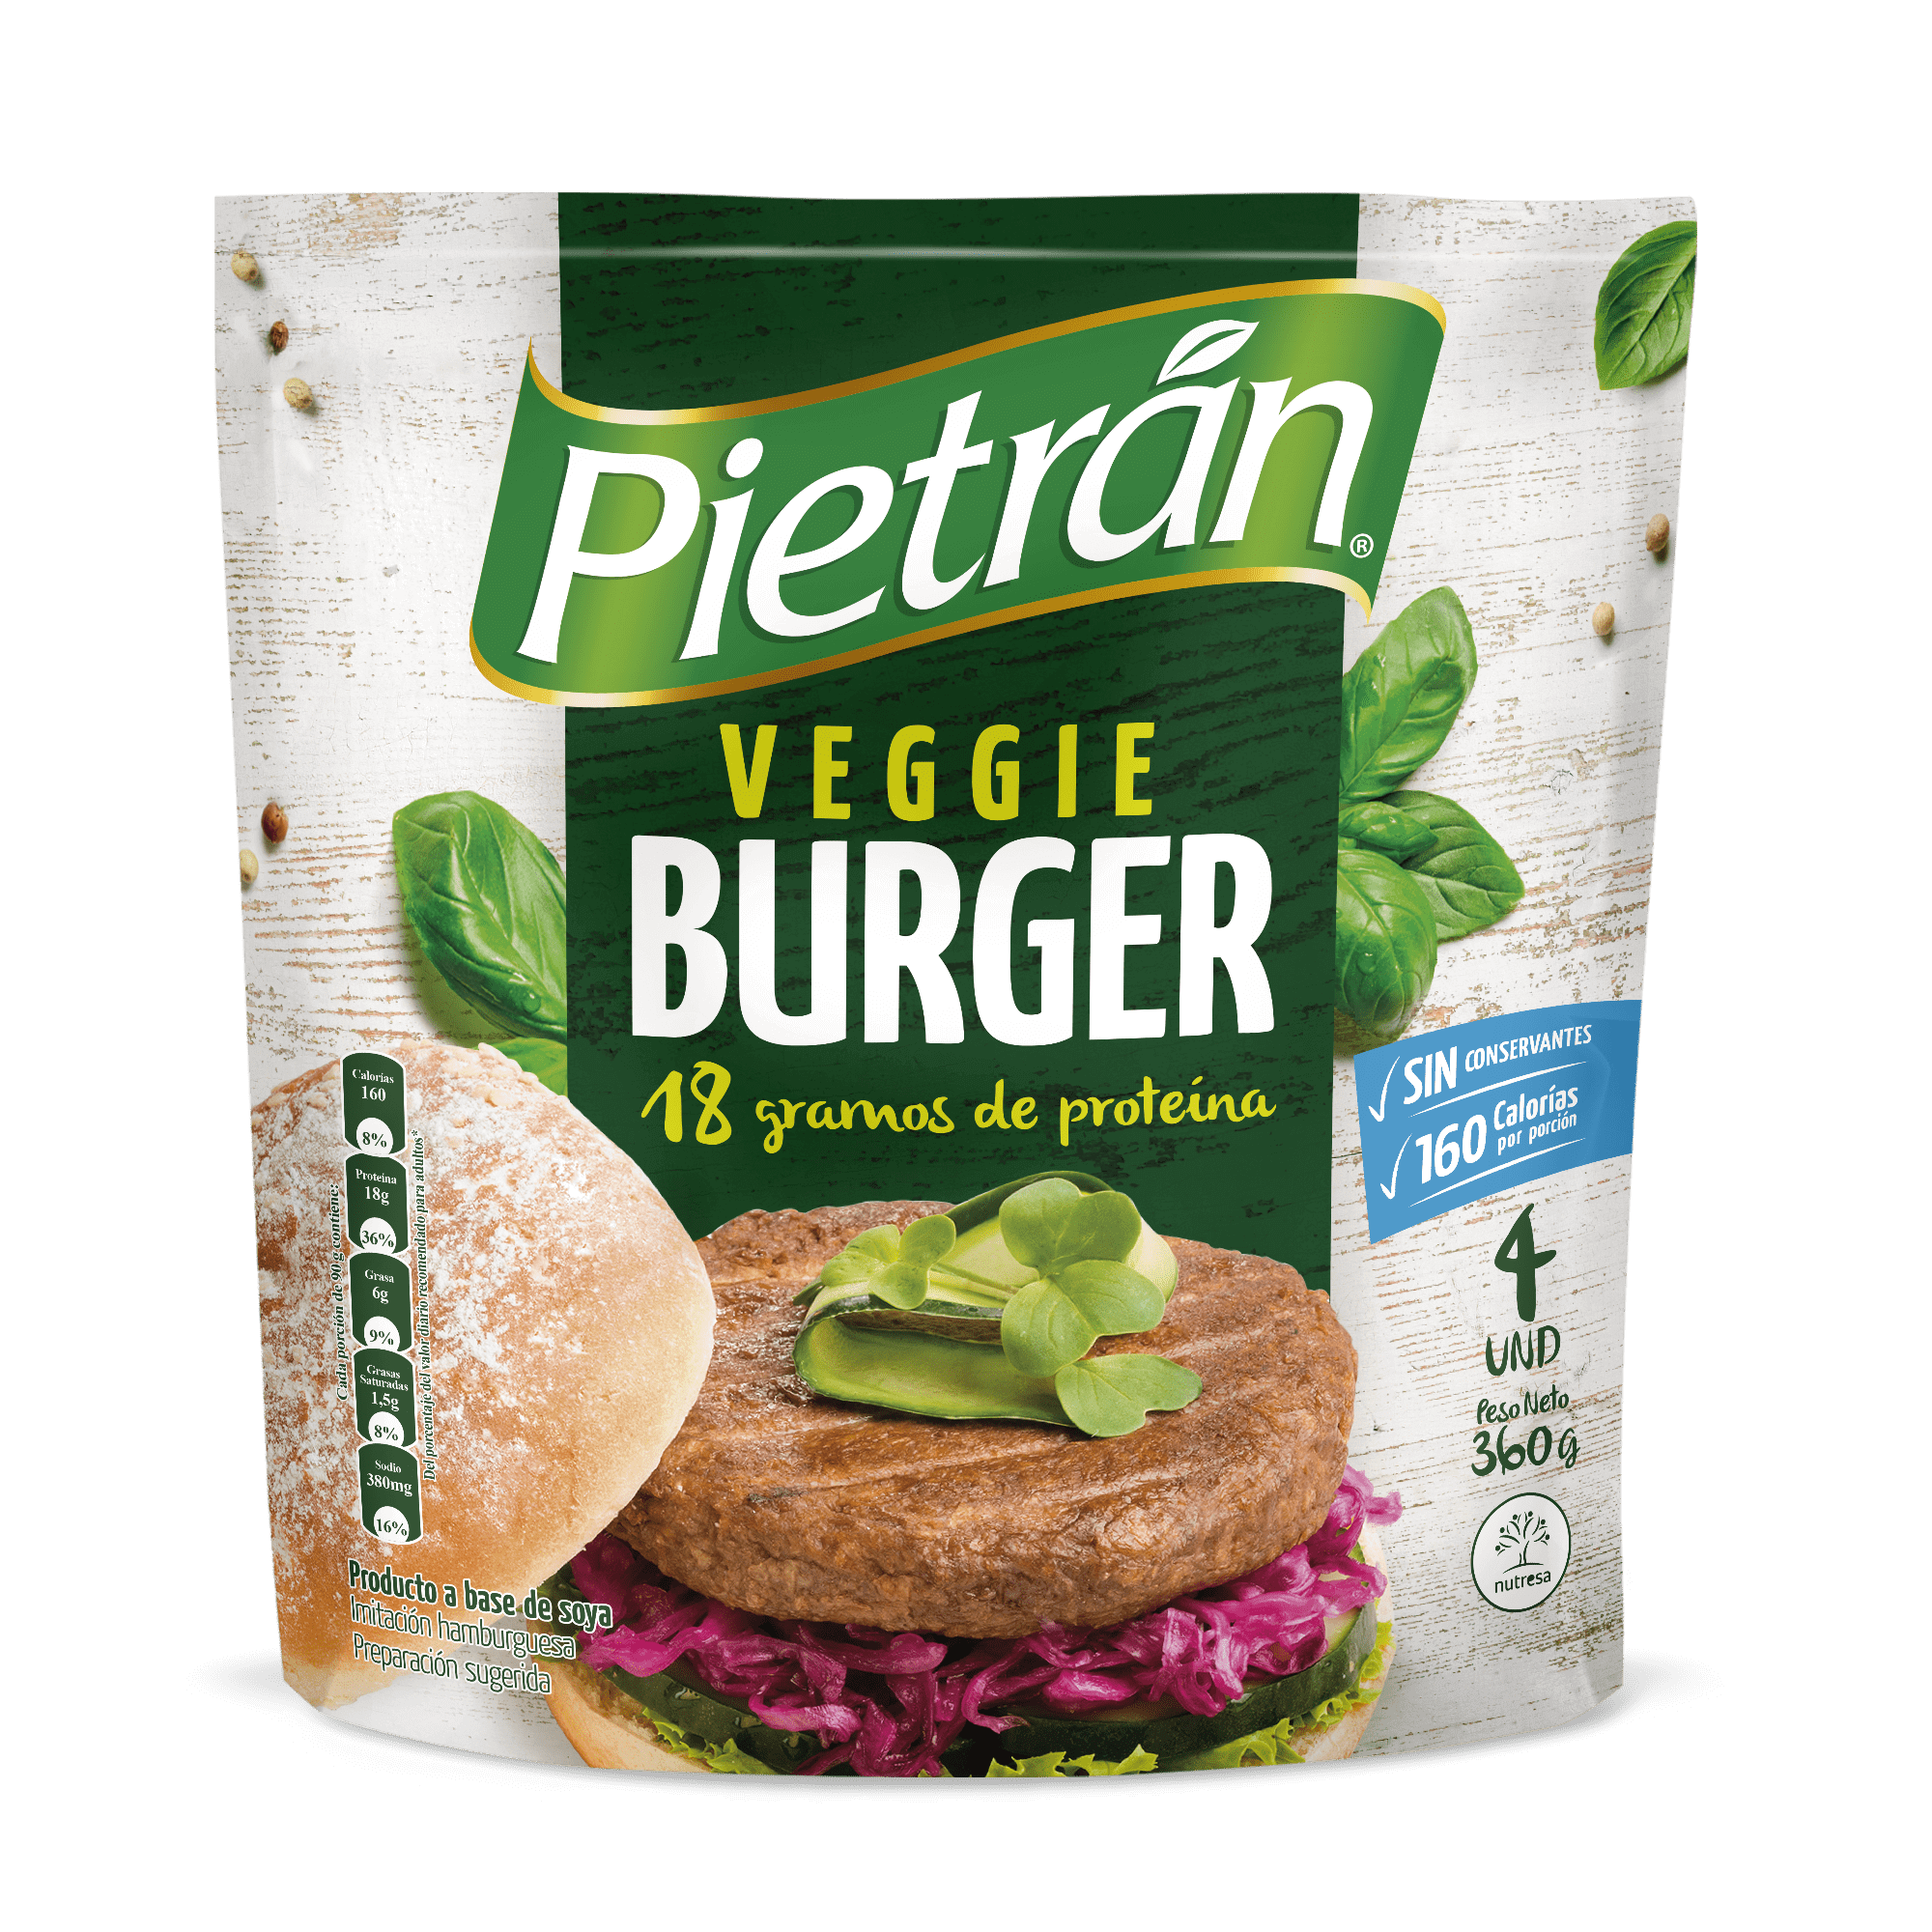 Veggie Burger Pietrán